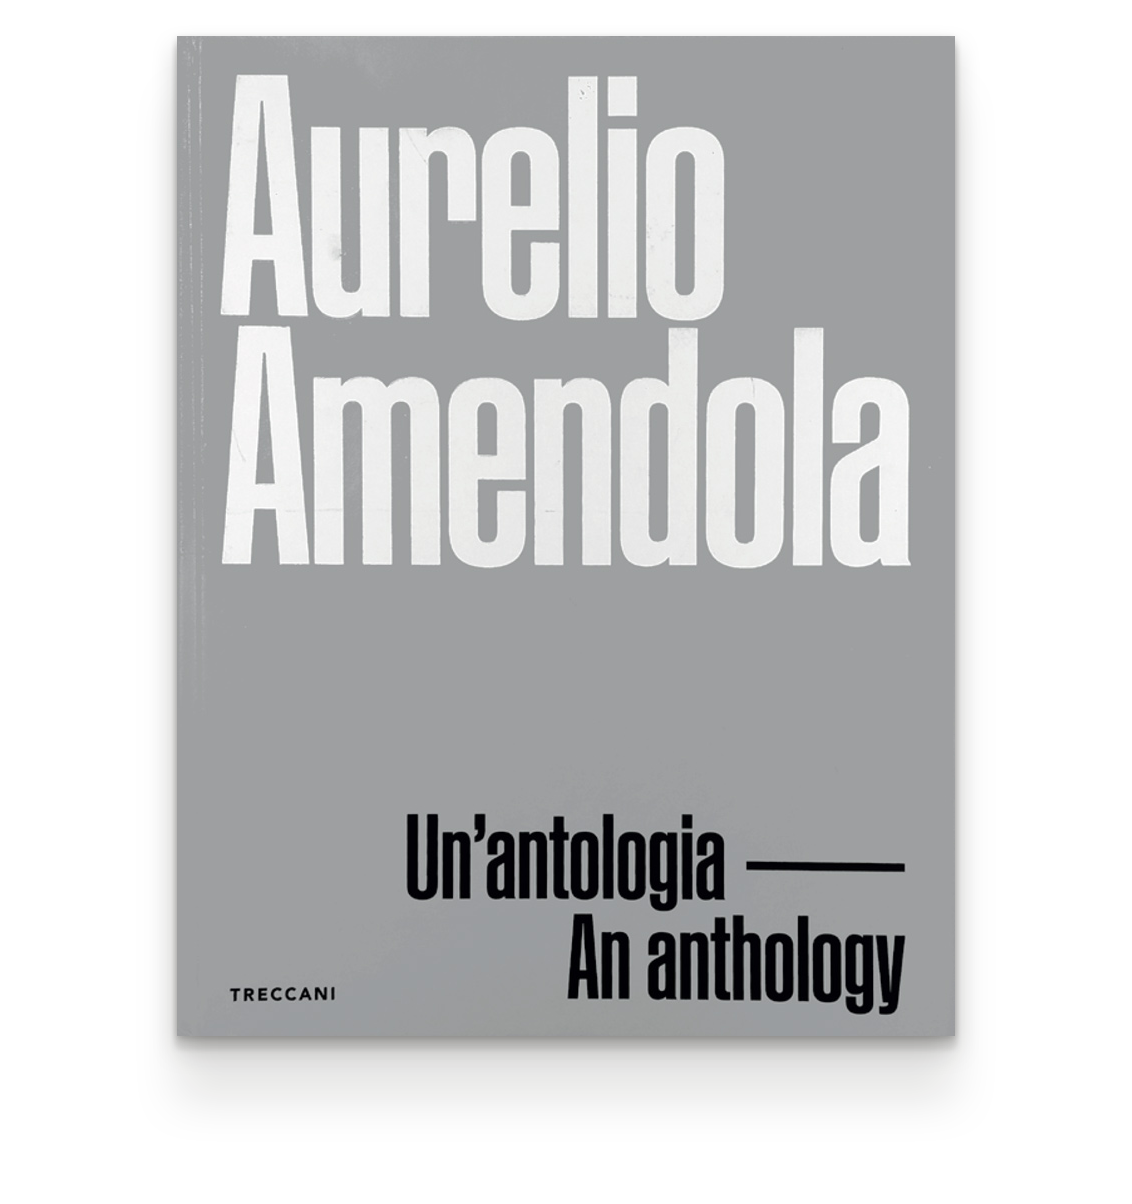 Aurelio Amendola. An anthology